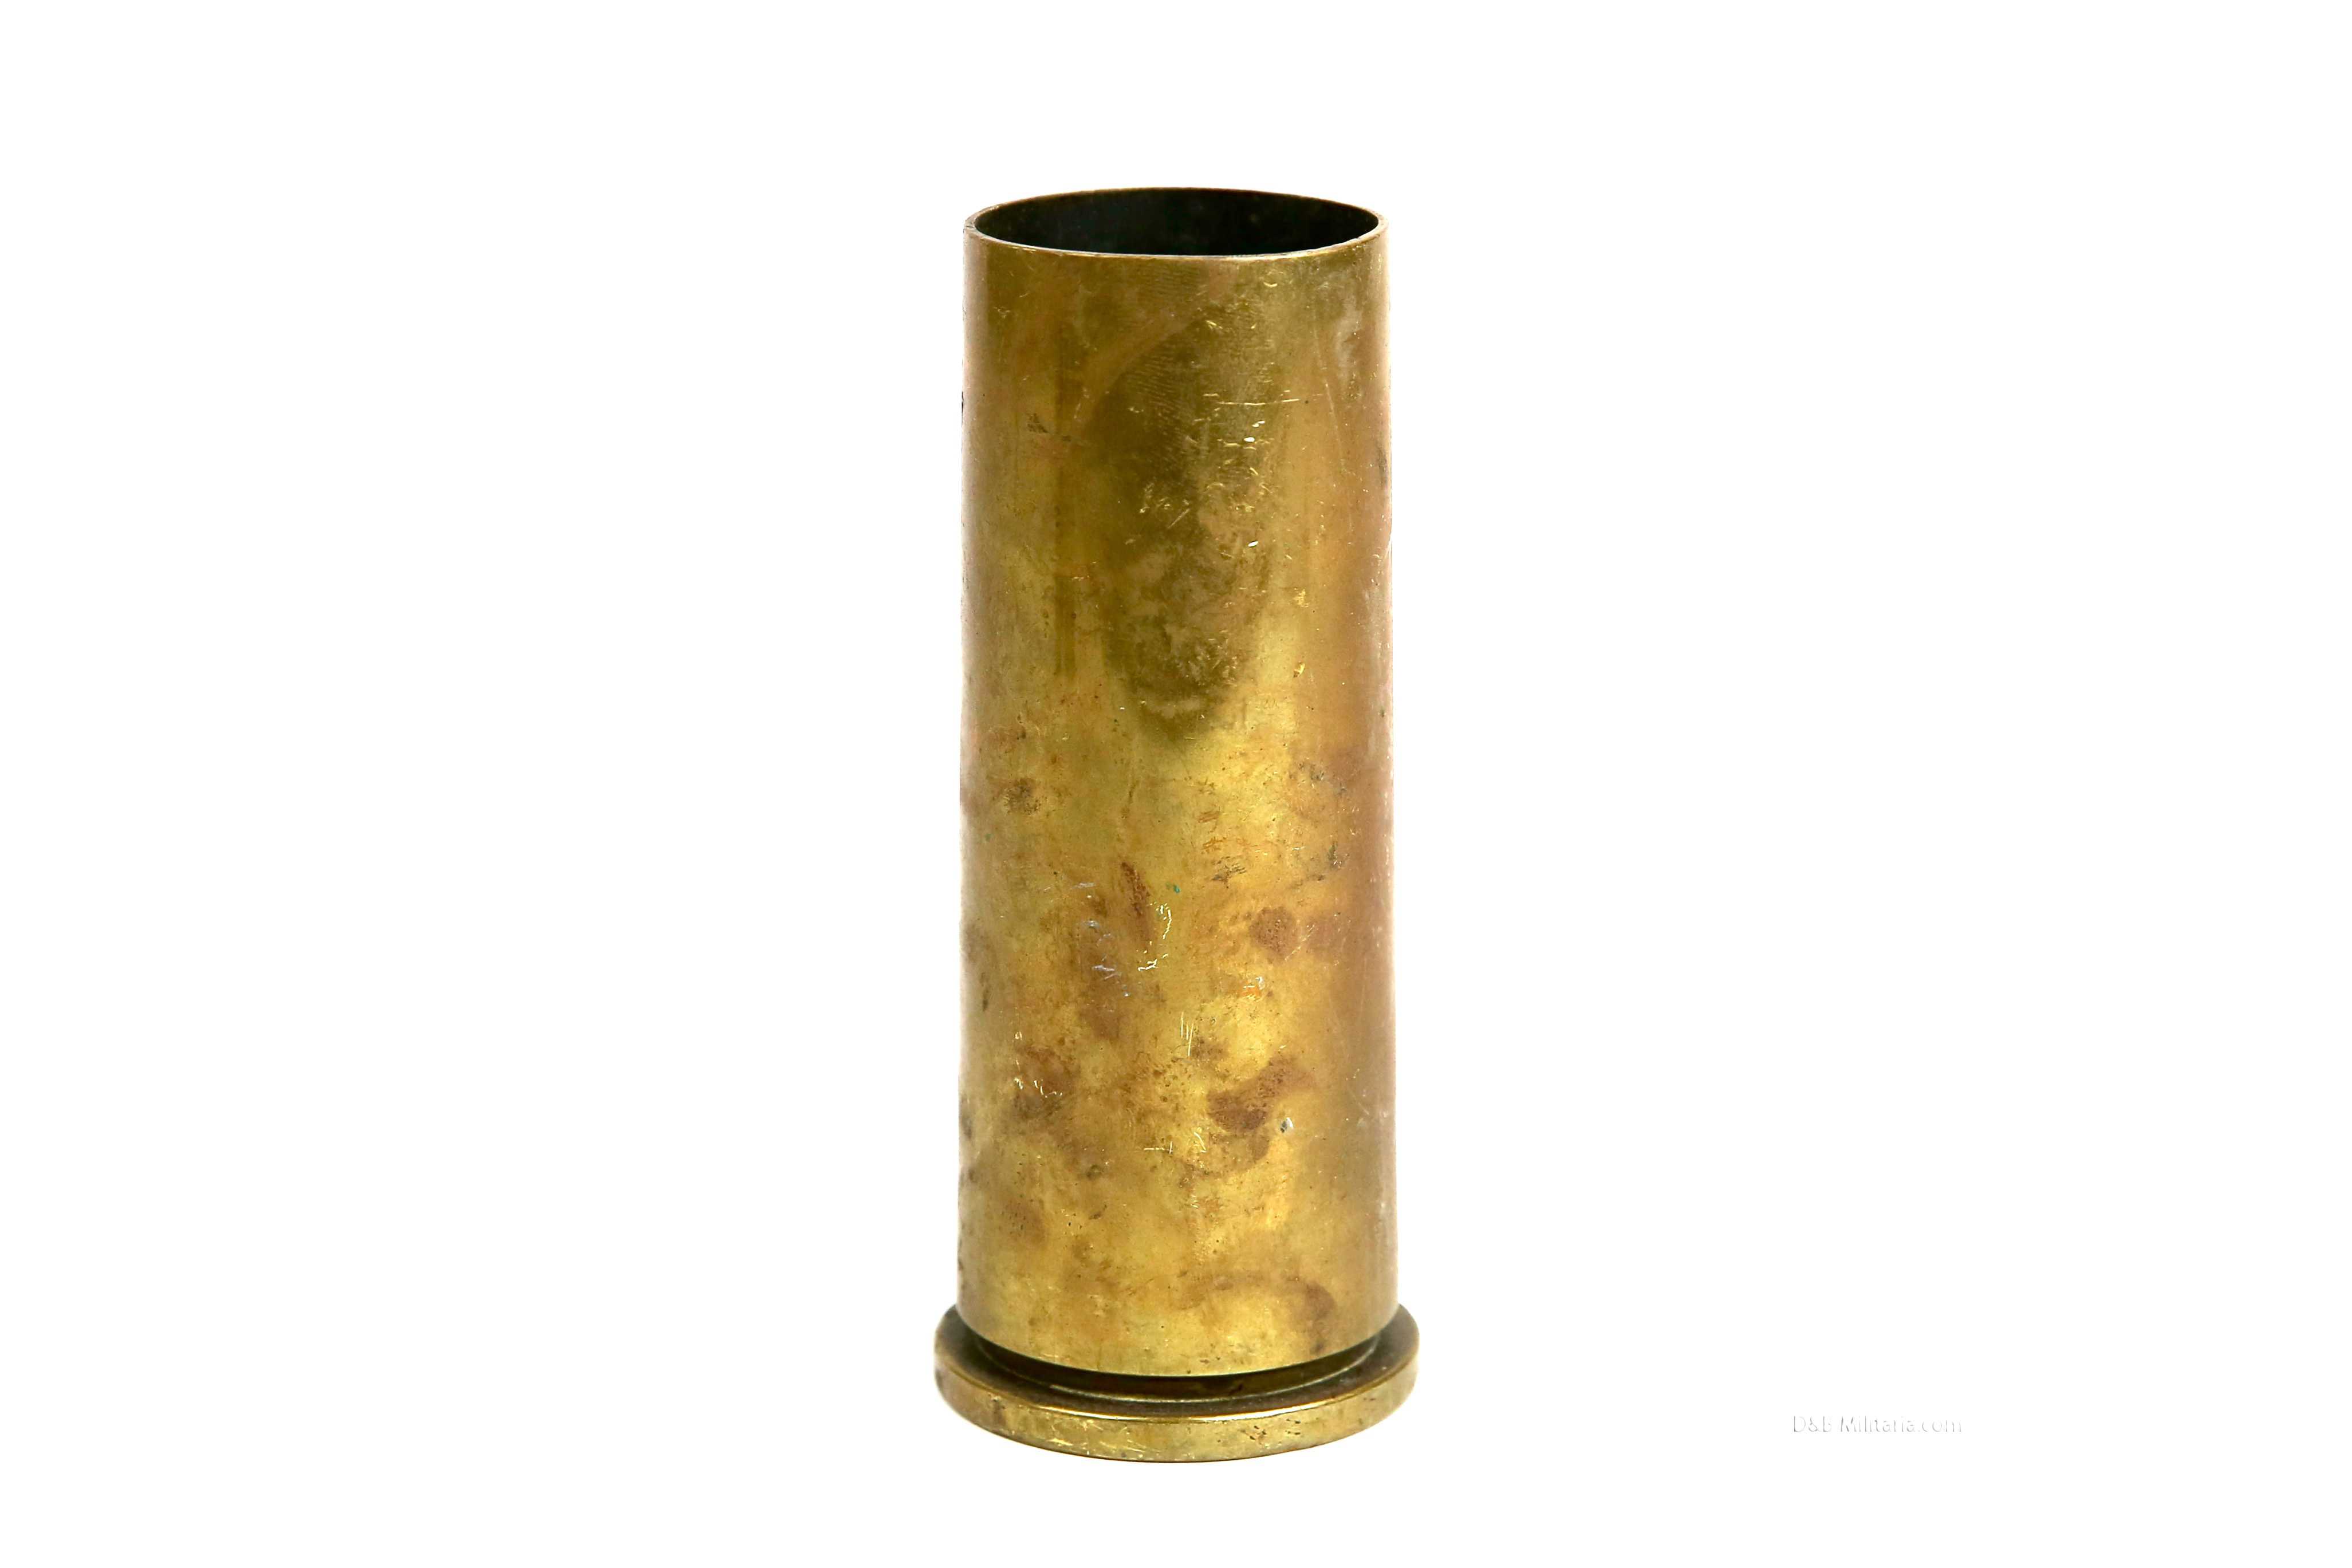 WW2 British 40mm shell case